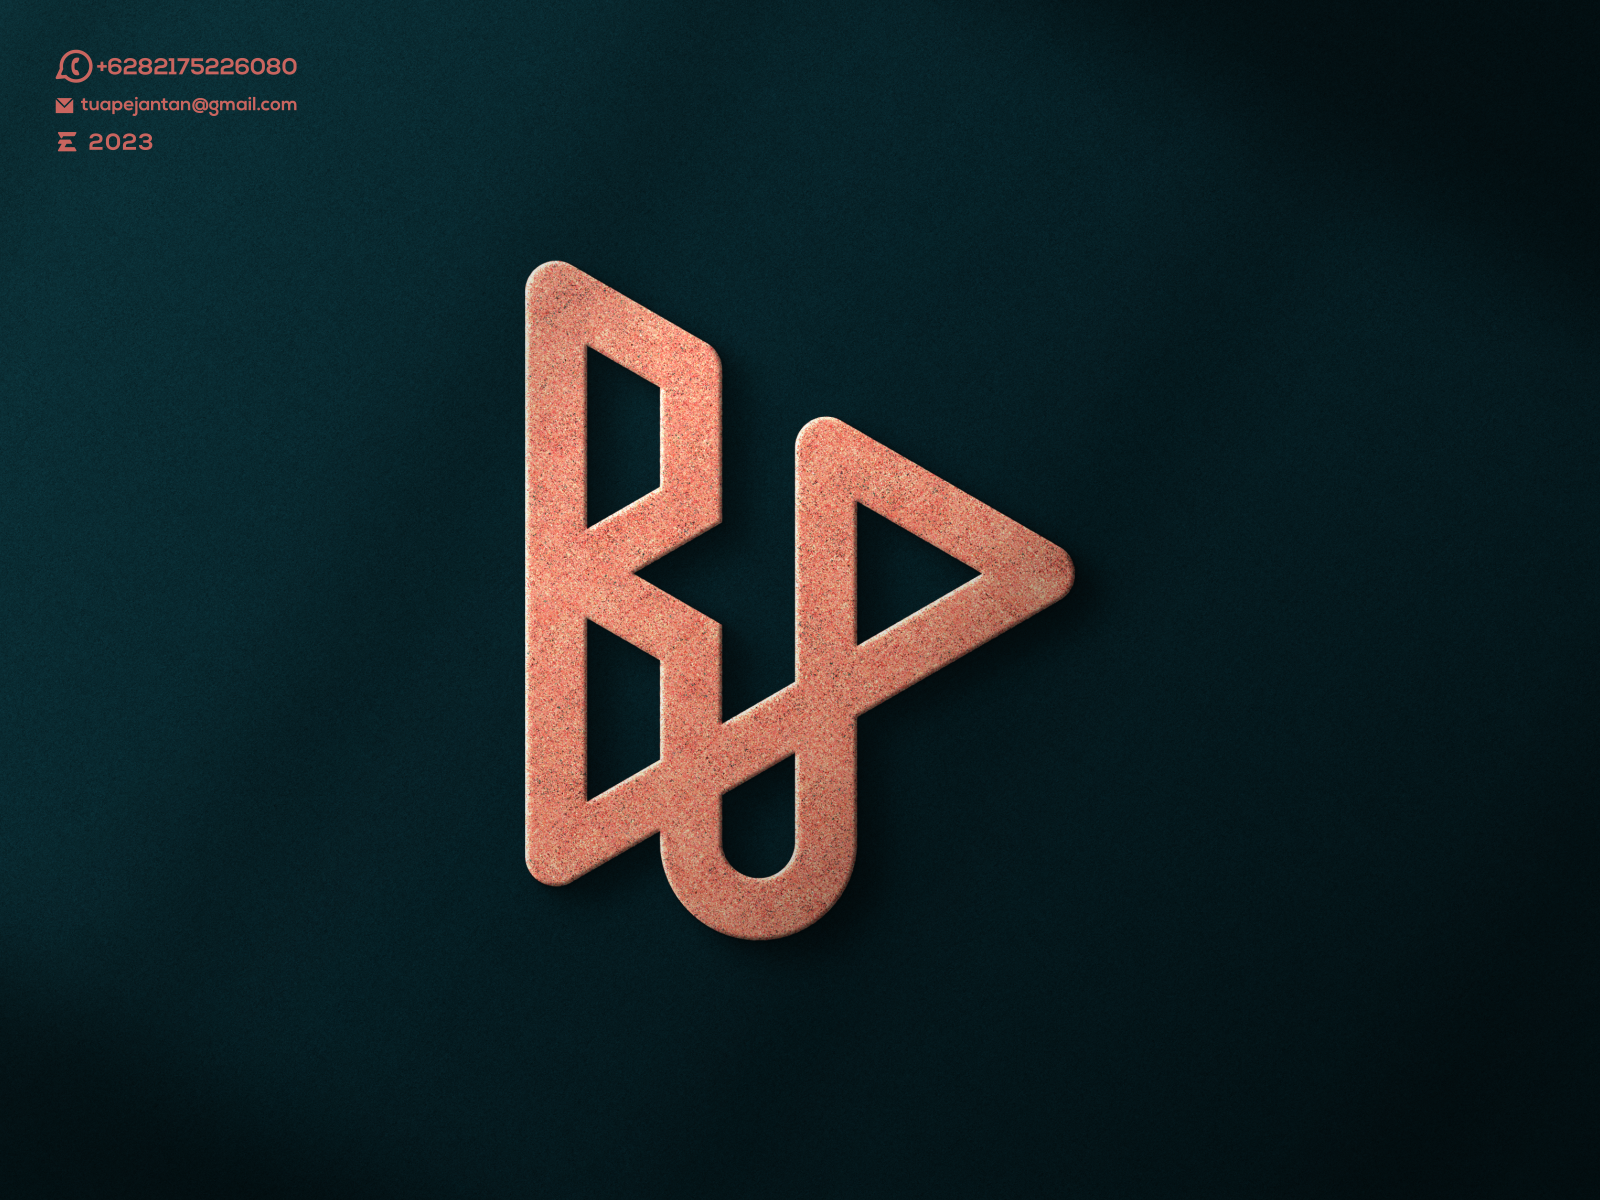 Bp logo design by Design Think on Dribbble